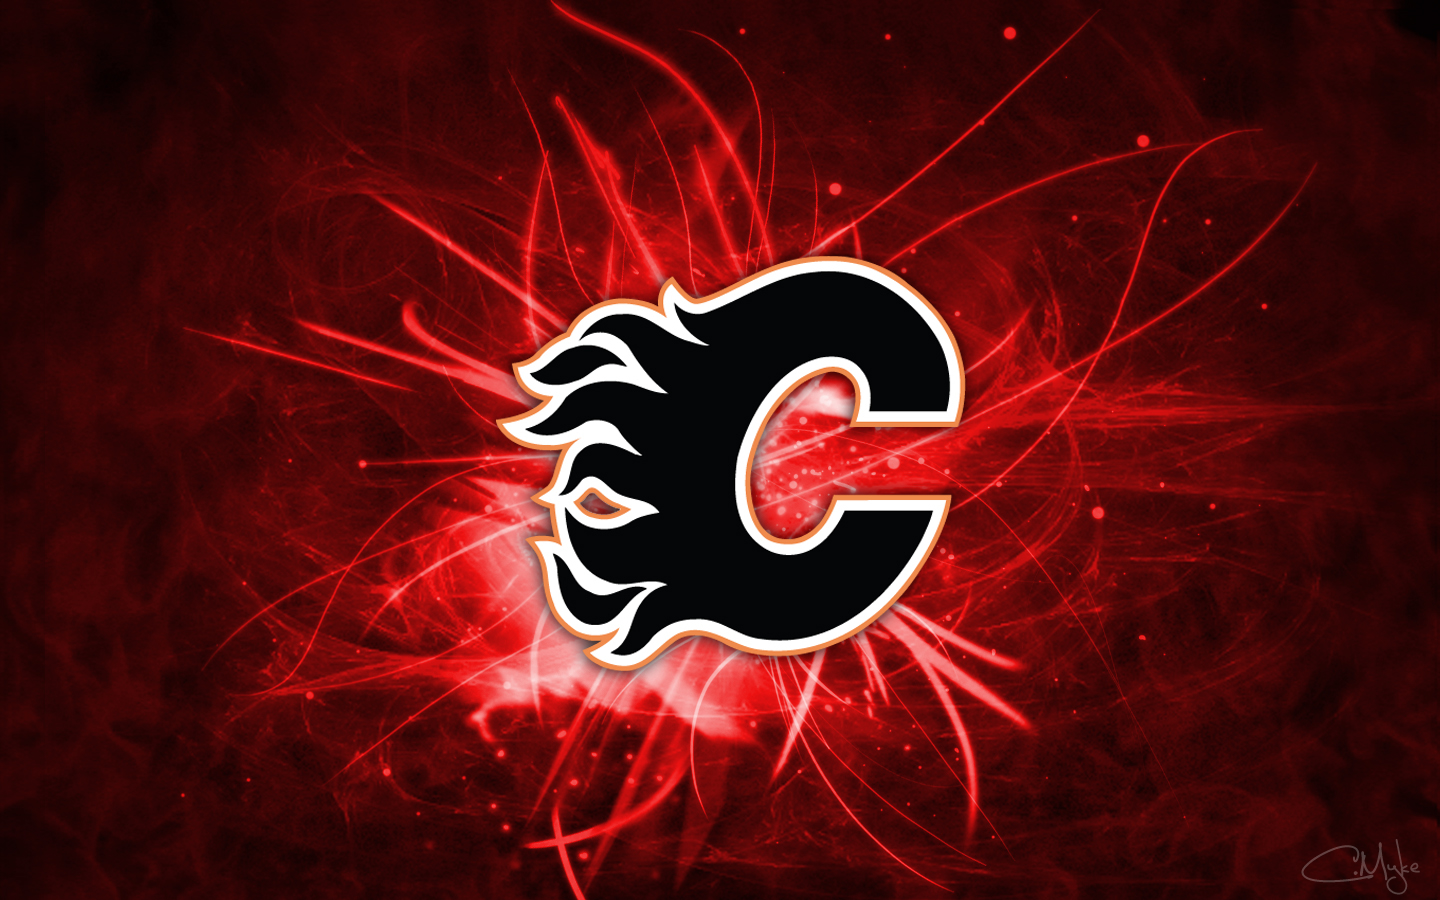 Detroit Red Wings vs. Calgary Flames at Little Caesars Arena